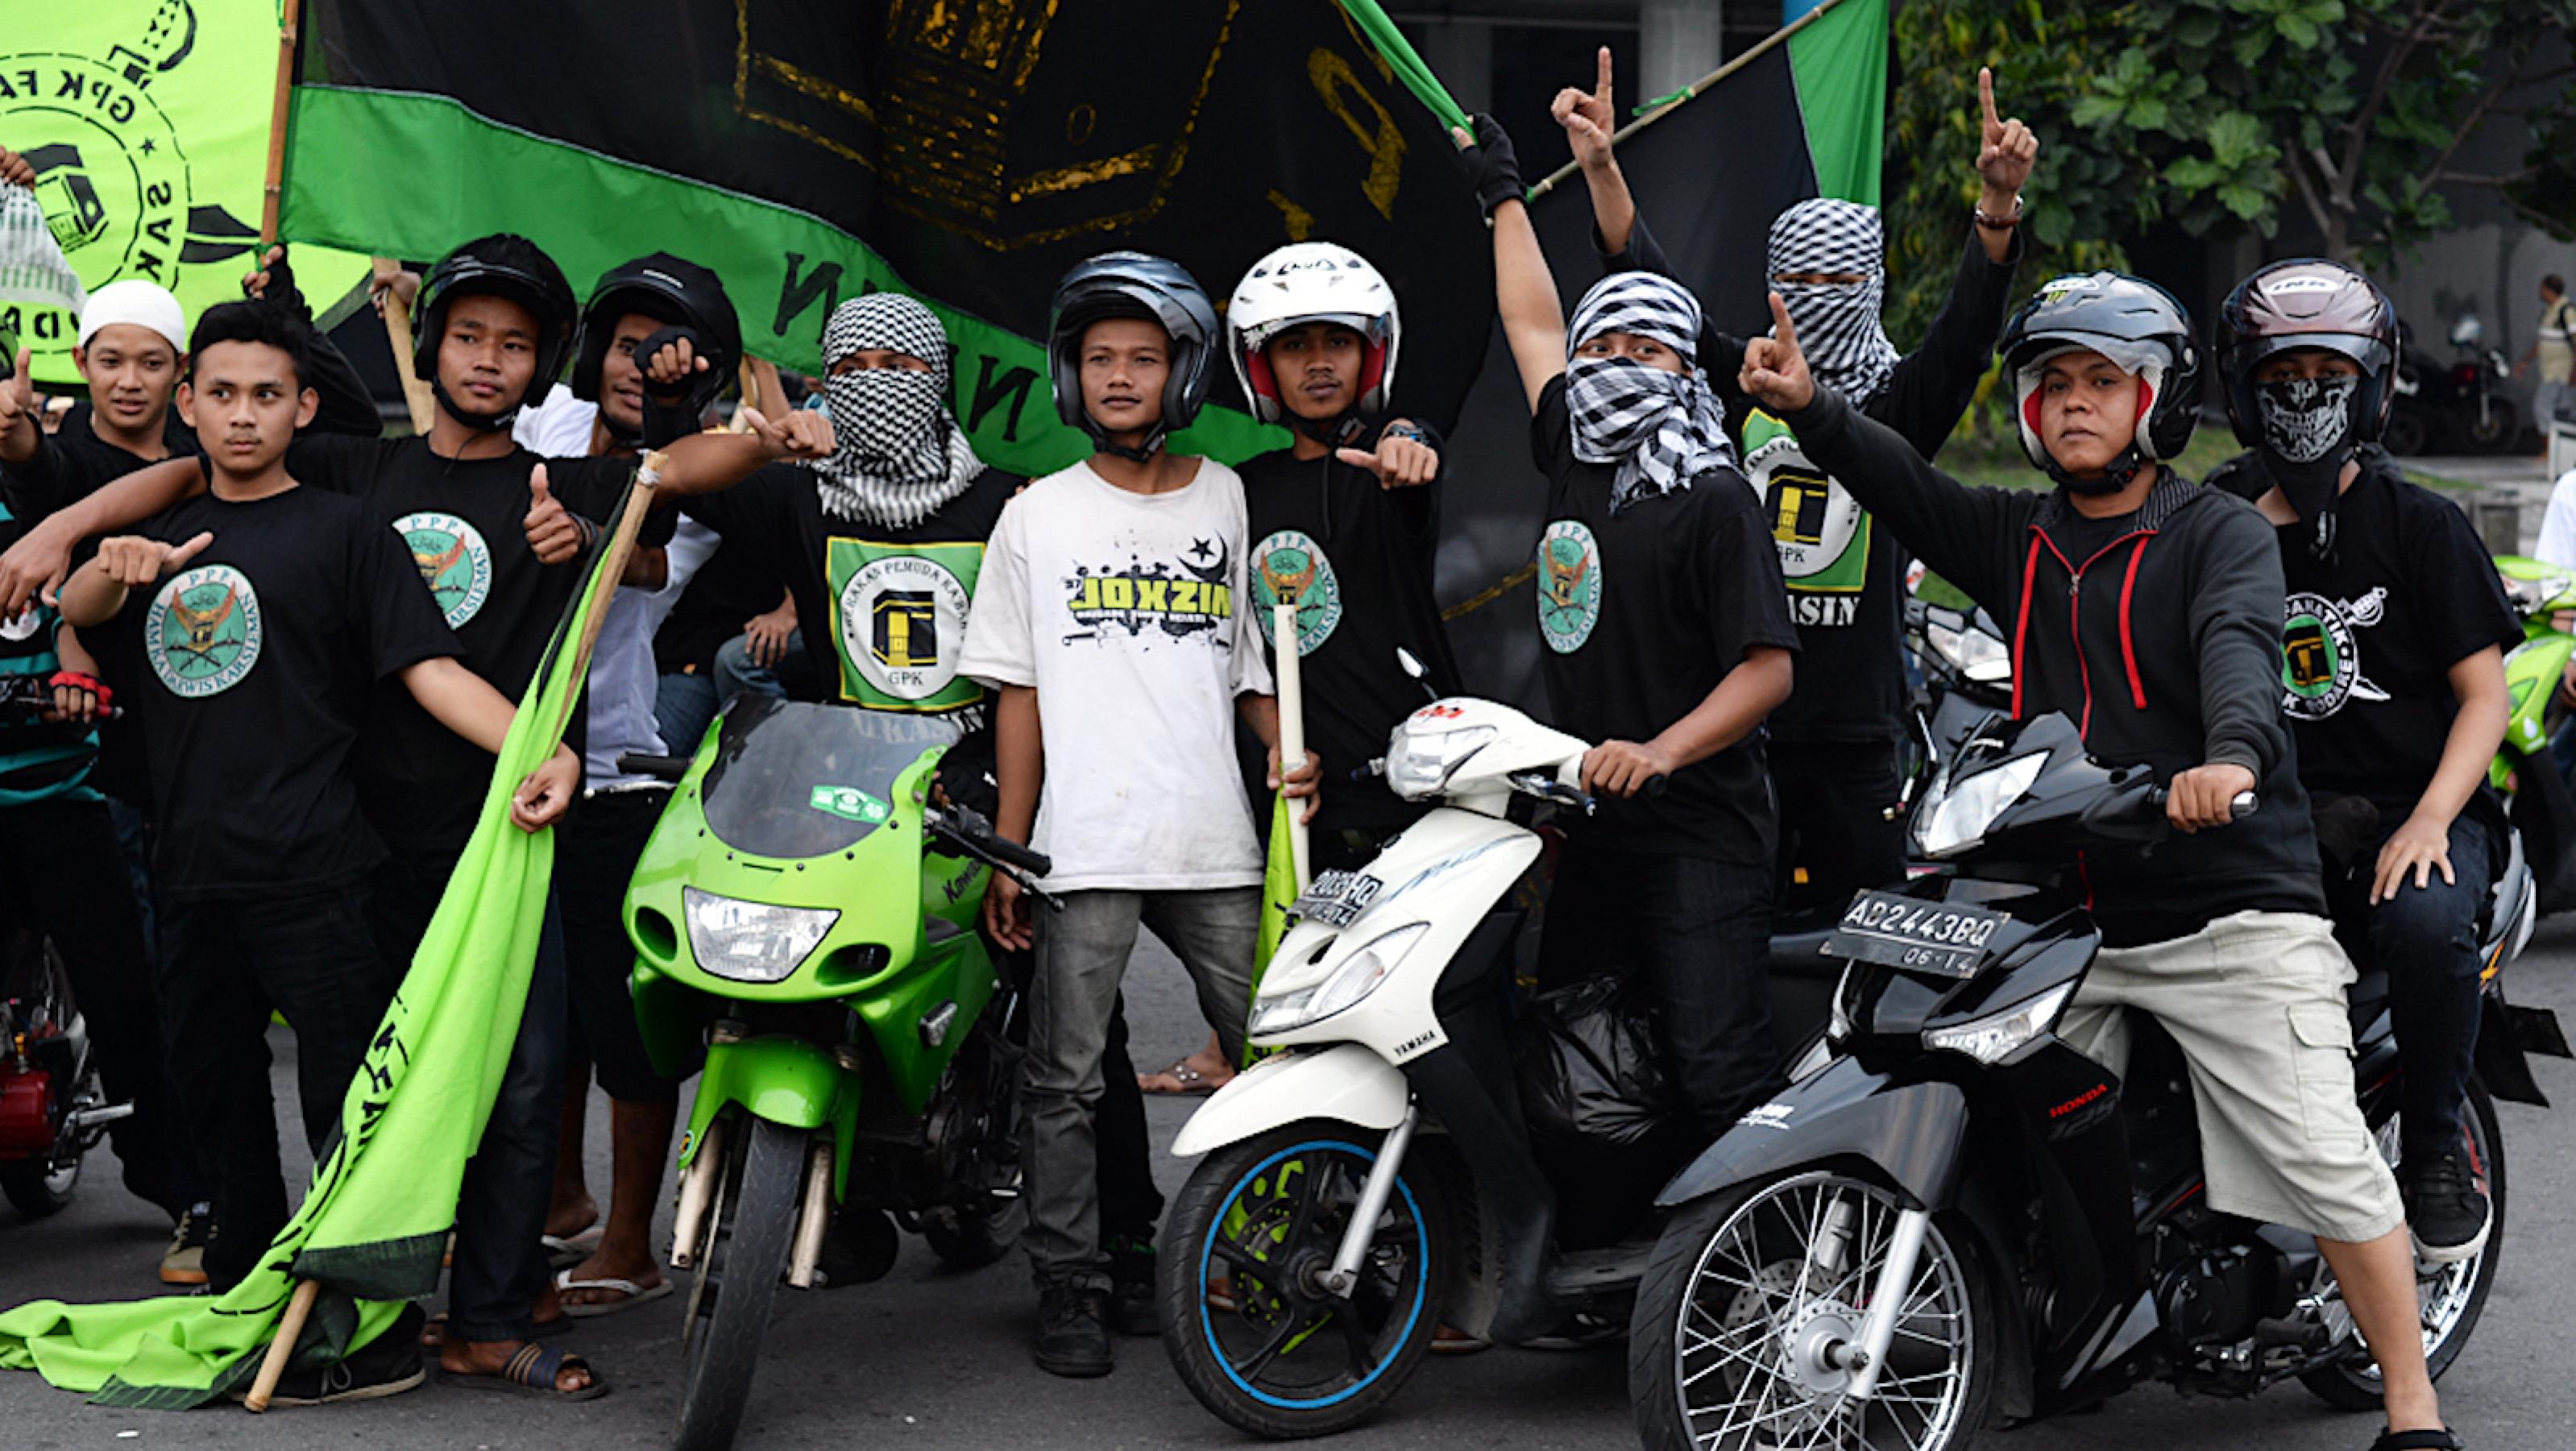 Junge Indonesier demonstrieren auf Mopeds mit Fahnen der Ka’abah-Jugendbewegung (GPK)